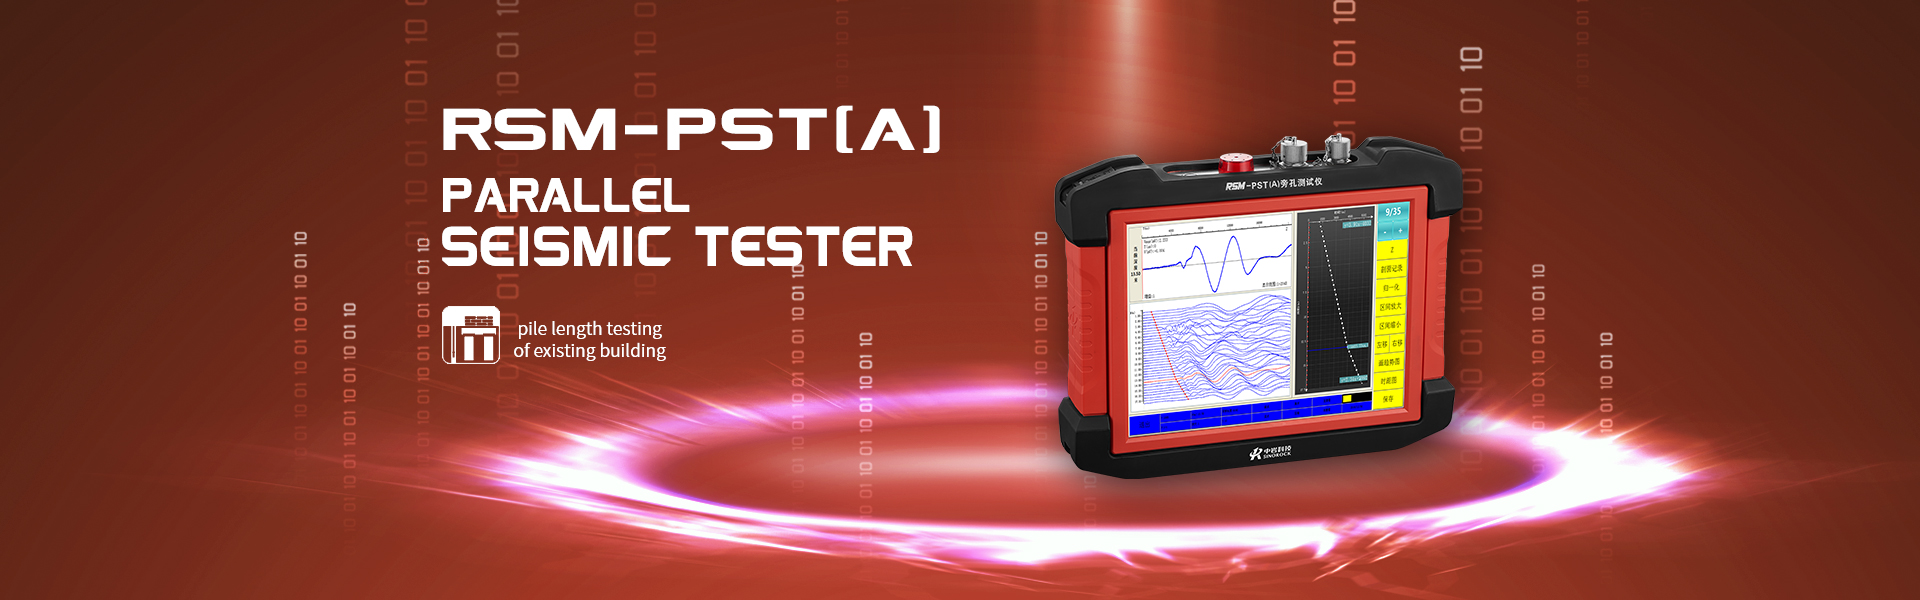 RSM-PST (A) Parallel Seismic Tester